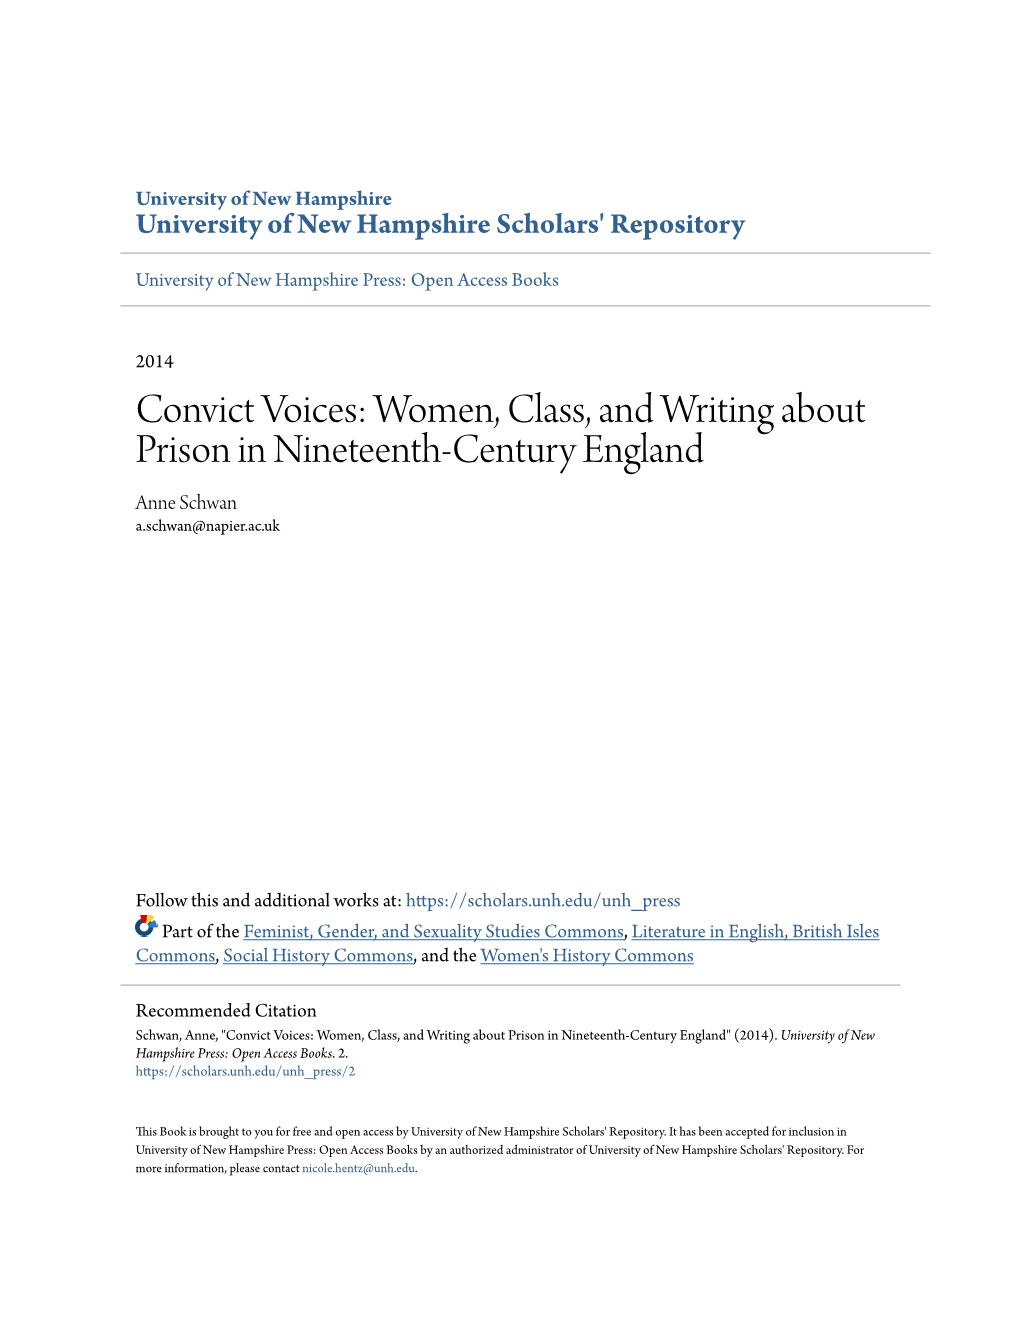 Women, Class, and Writing About Prison in Nineteenth-Century England Anne Schwan A.Schwan@Napier.Ac.Uk